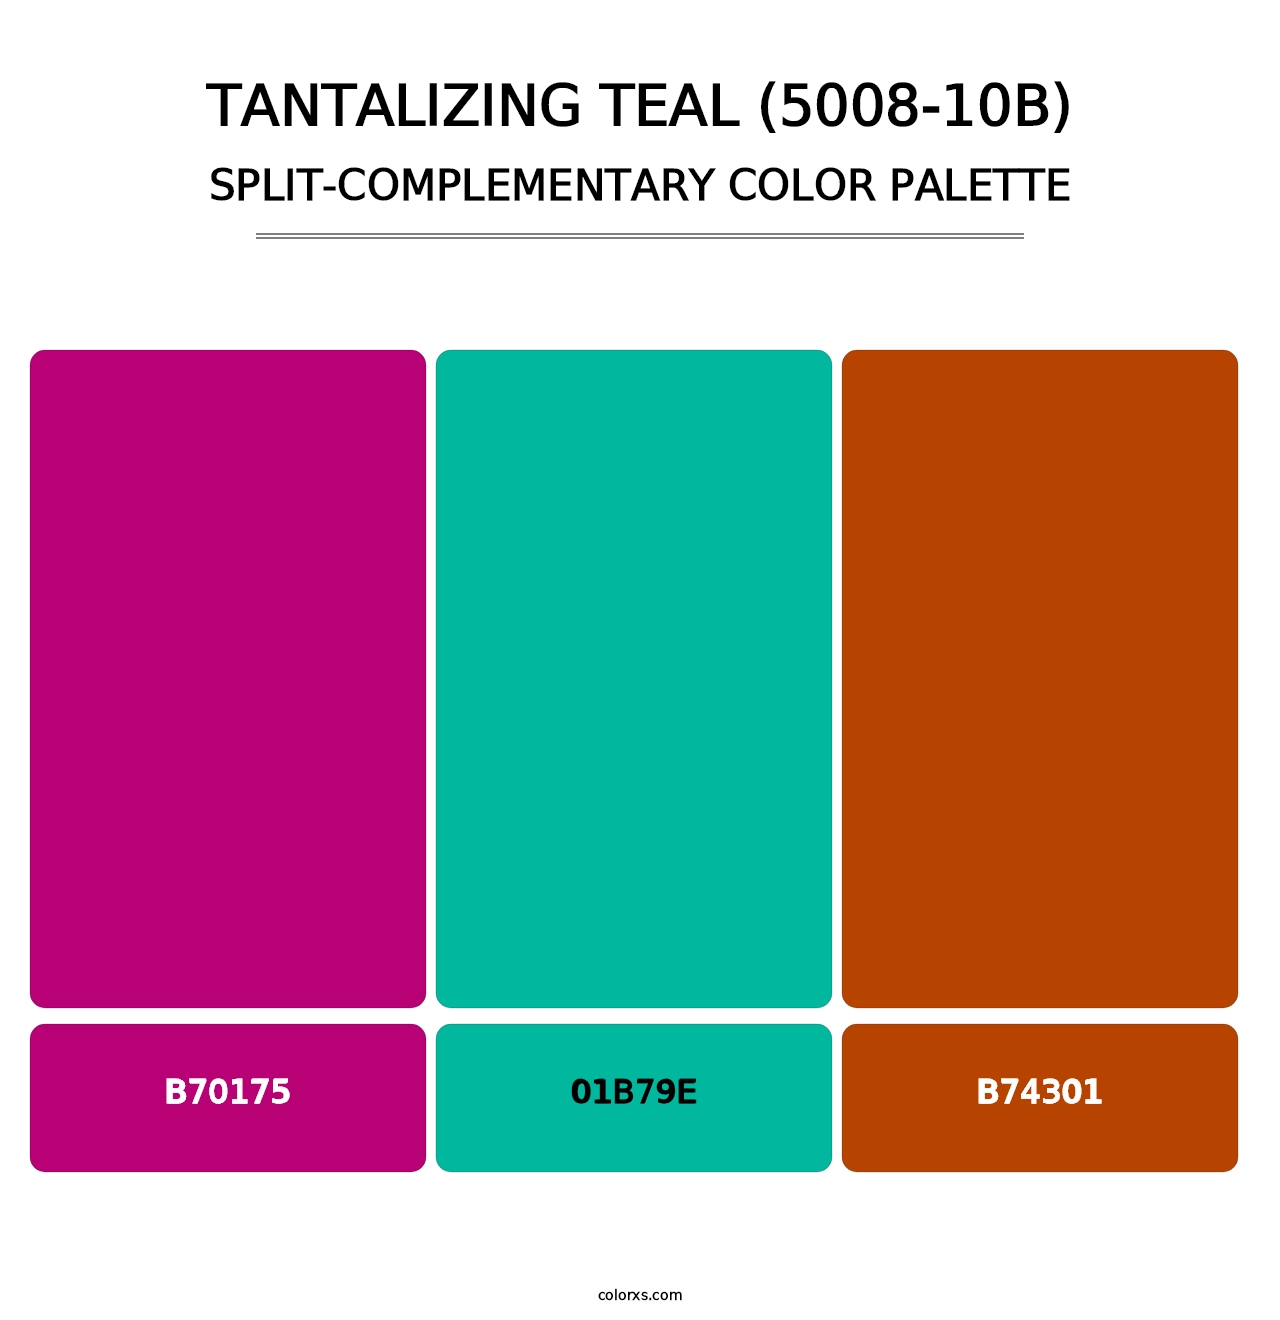 Tantalizing Teal (5008-10B) - Split-Complementary Color Palette